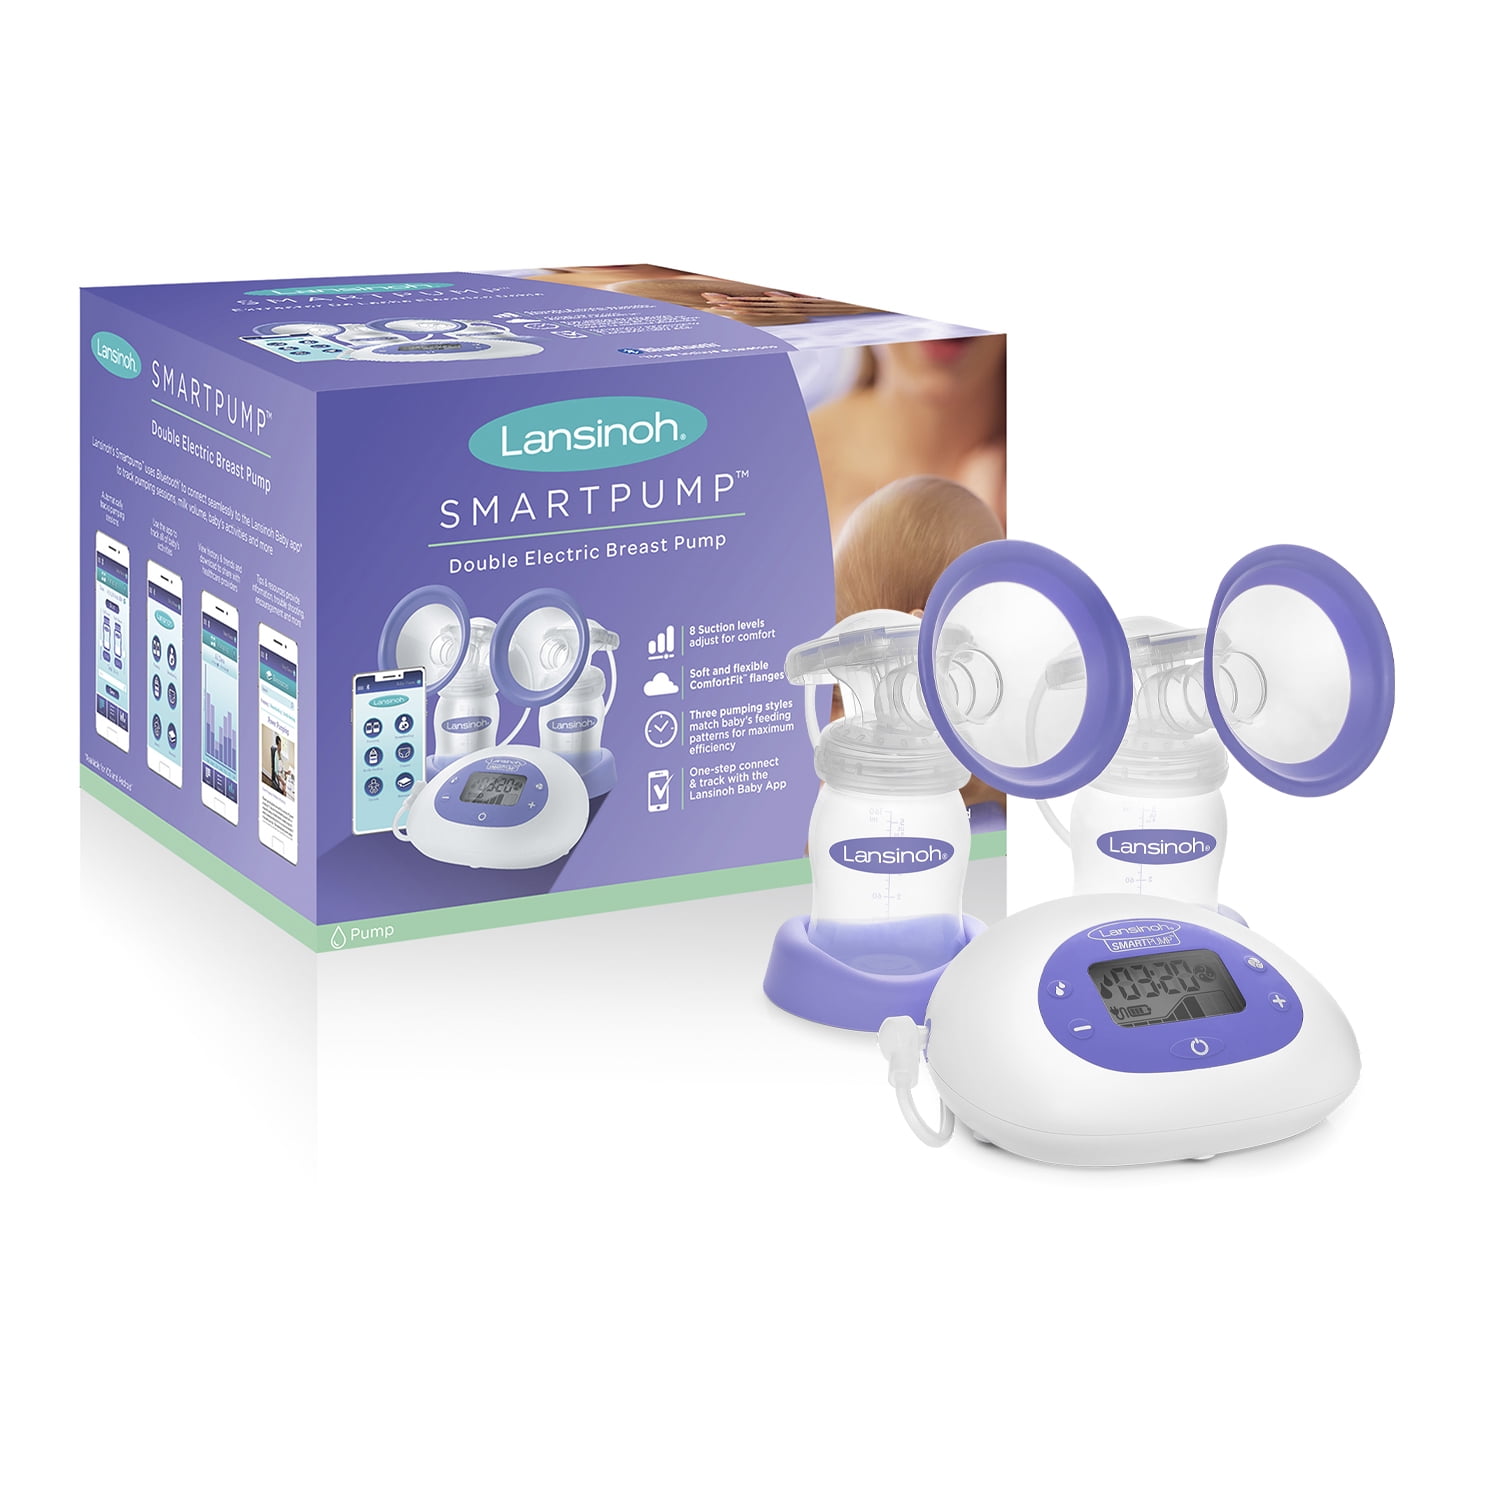 Lansinoh Smartpump Double Electric Breast Pump - Walmart.com